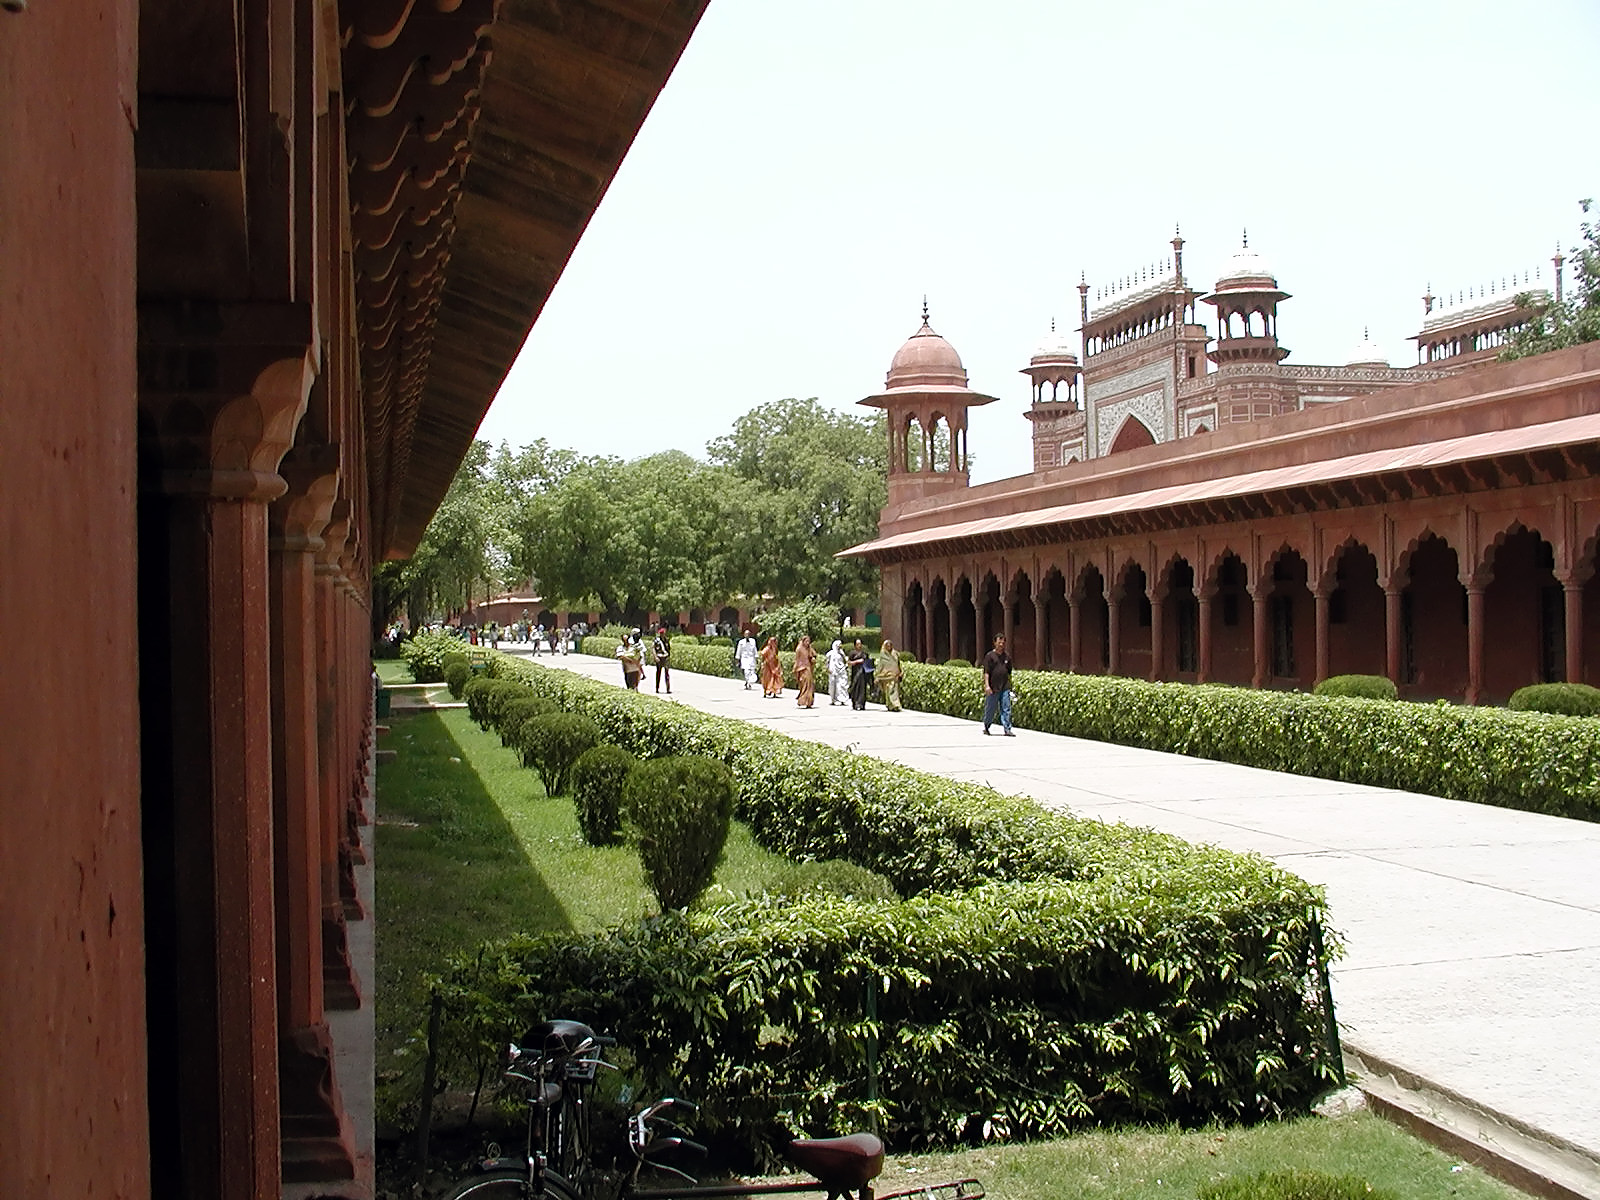 10-Jun-2001 11:53 - Agra - The Taj Mahal - Just inside the entrance